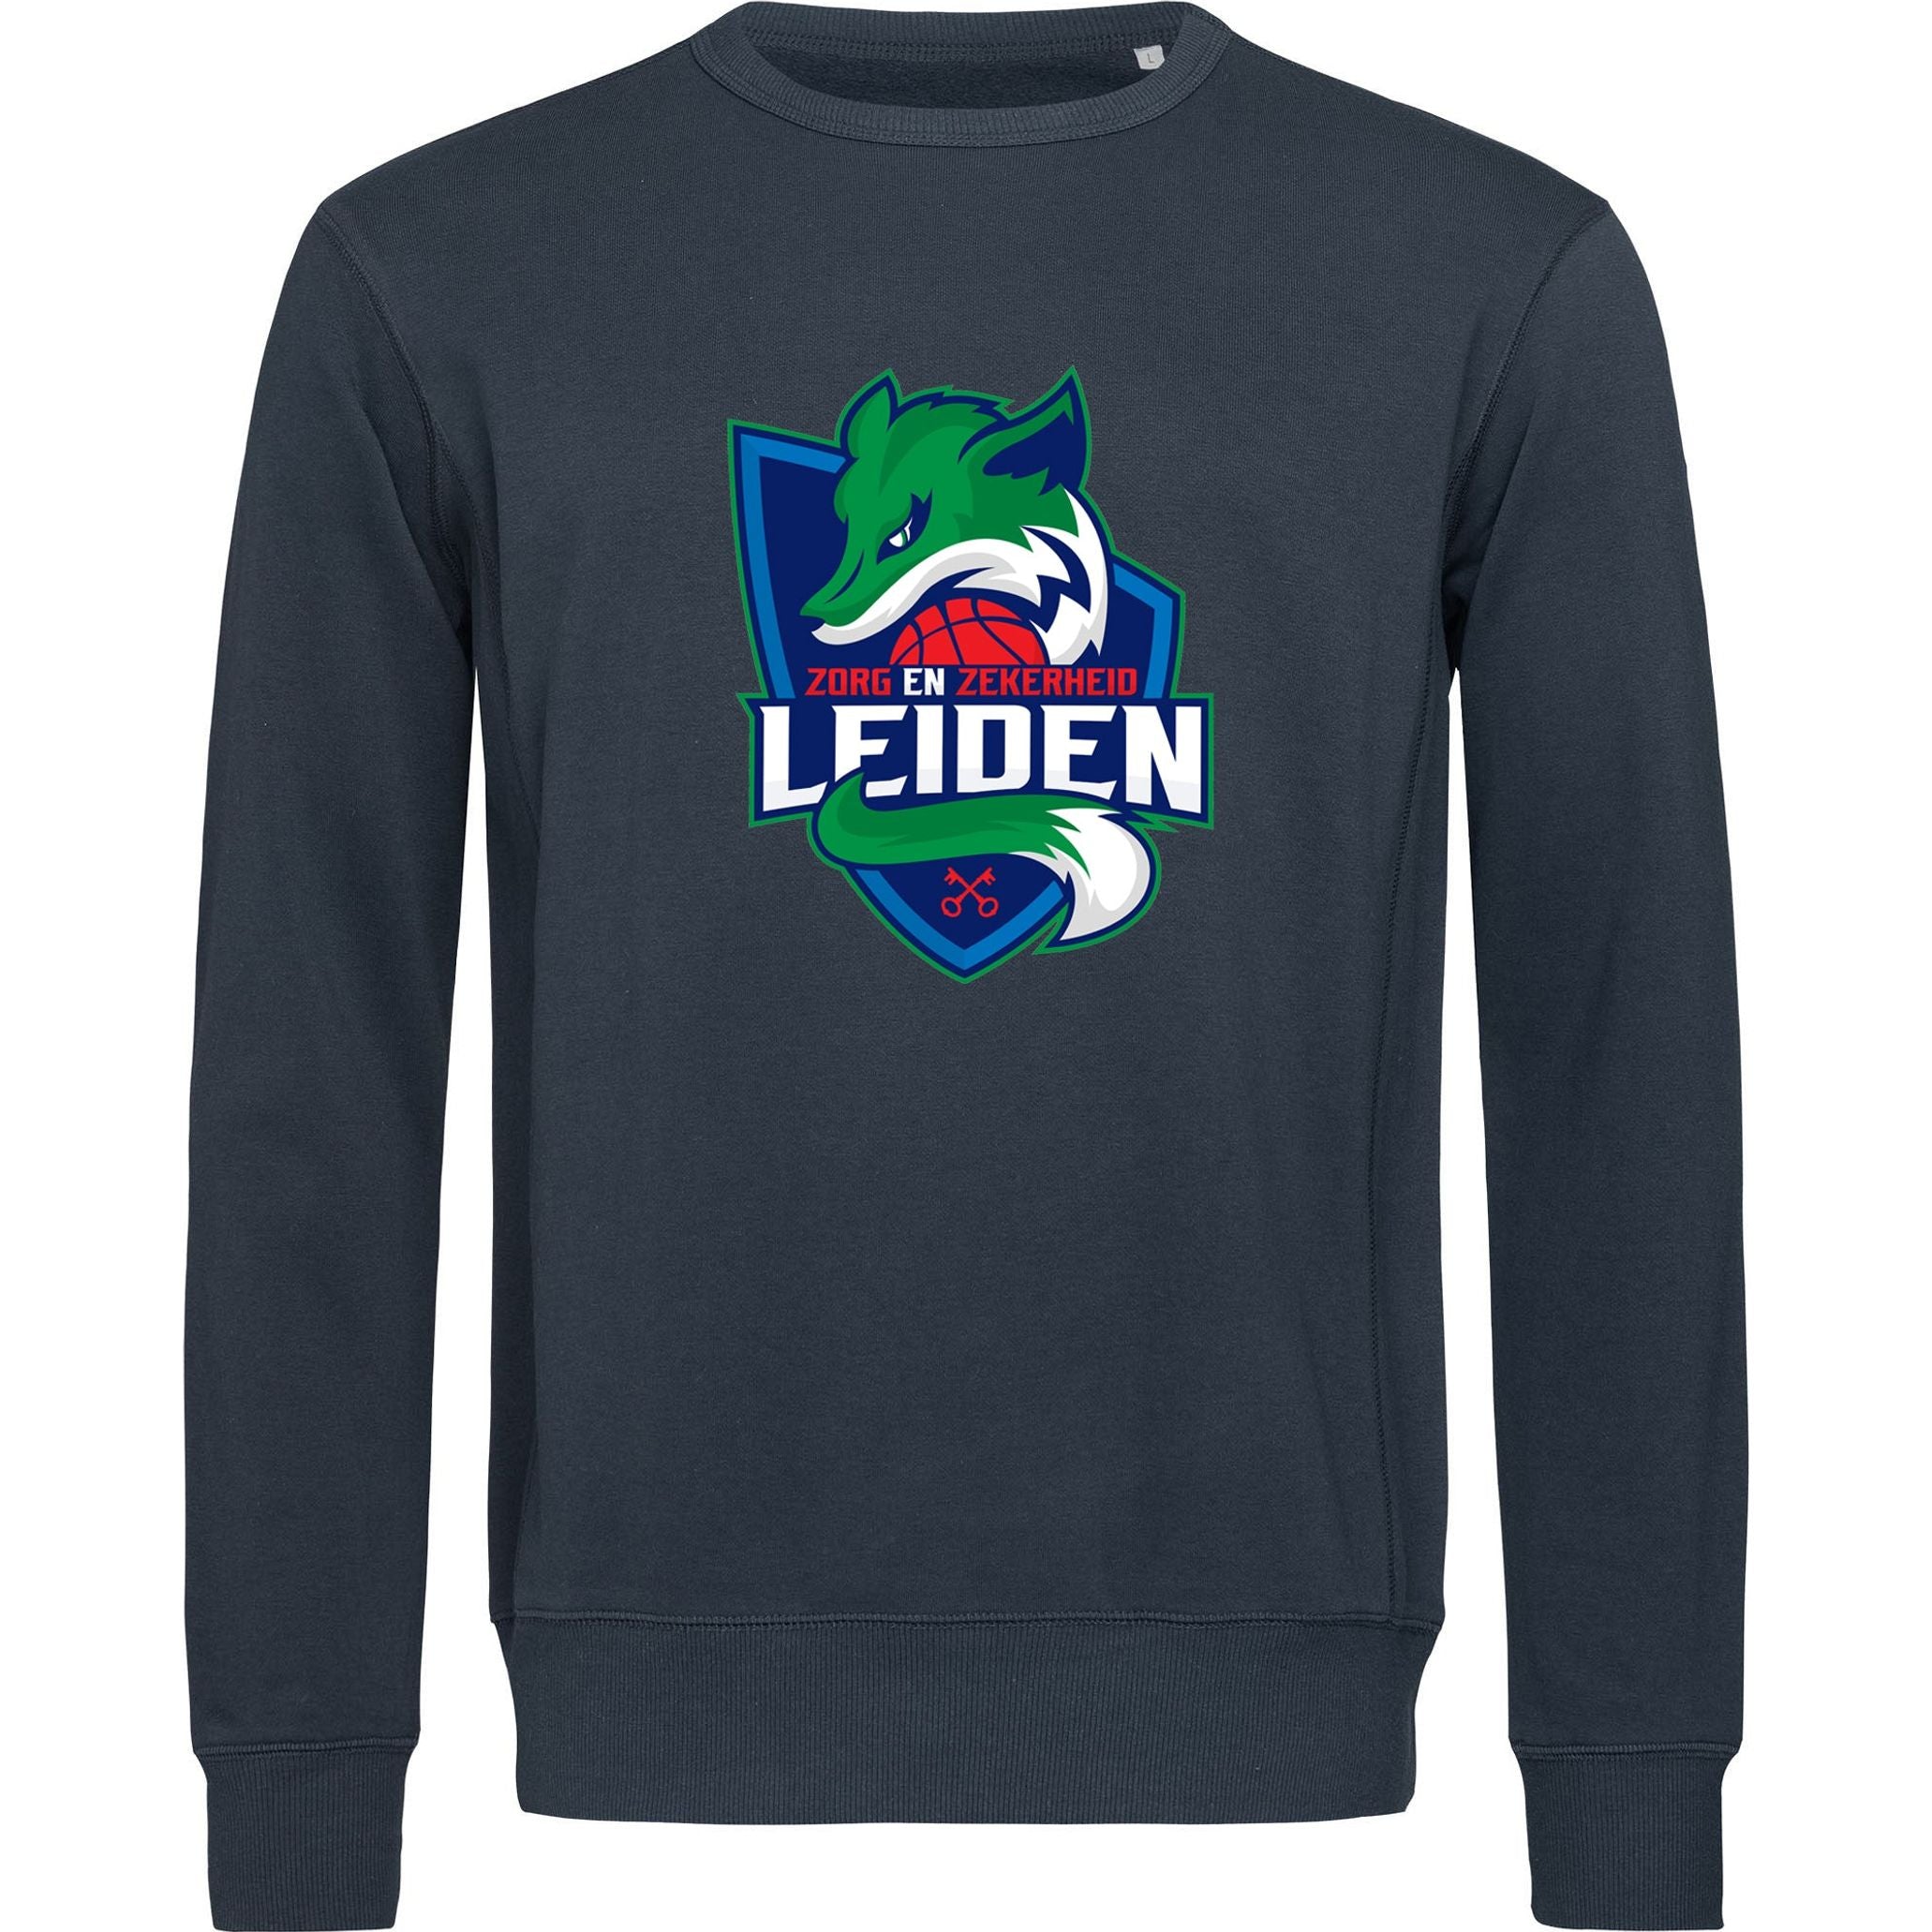 ZZ Leiden - Sweater Groot Logo